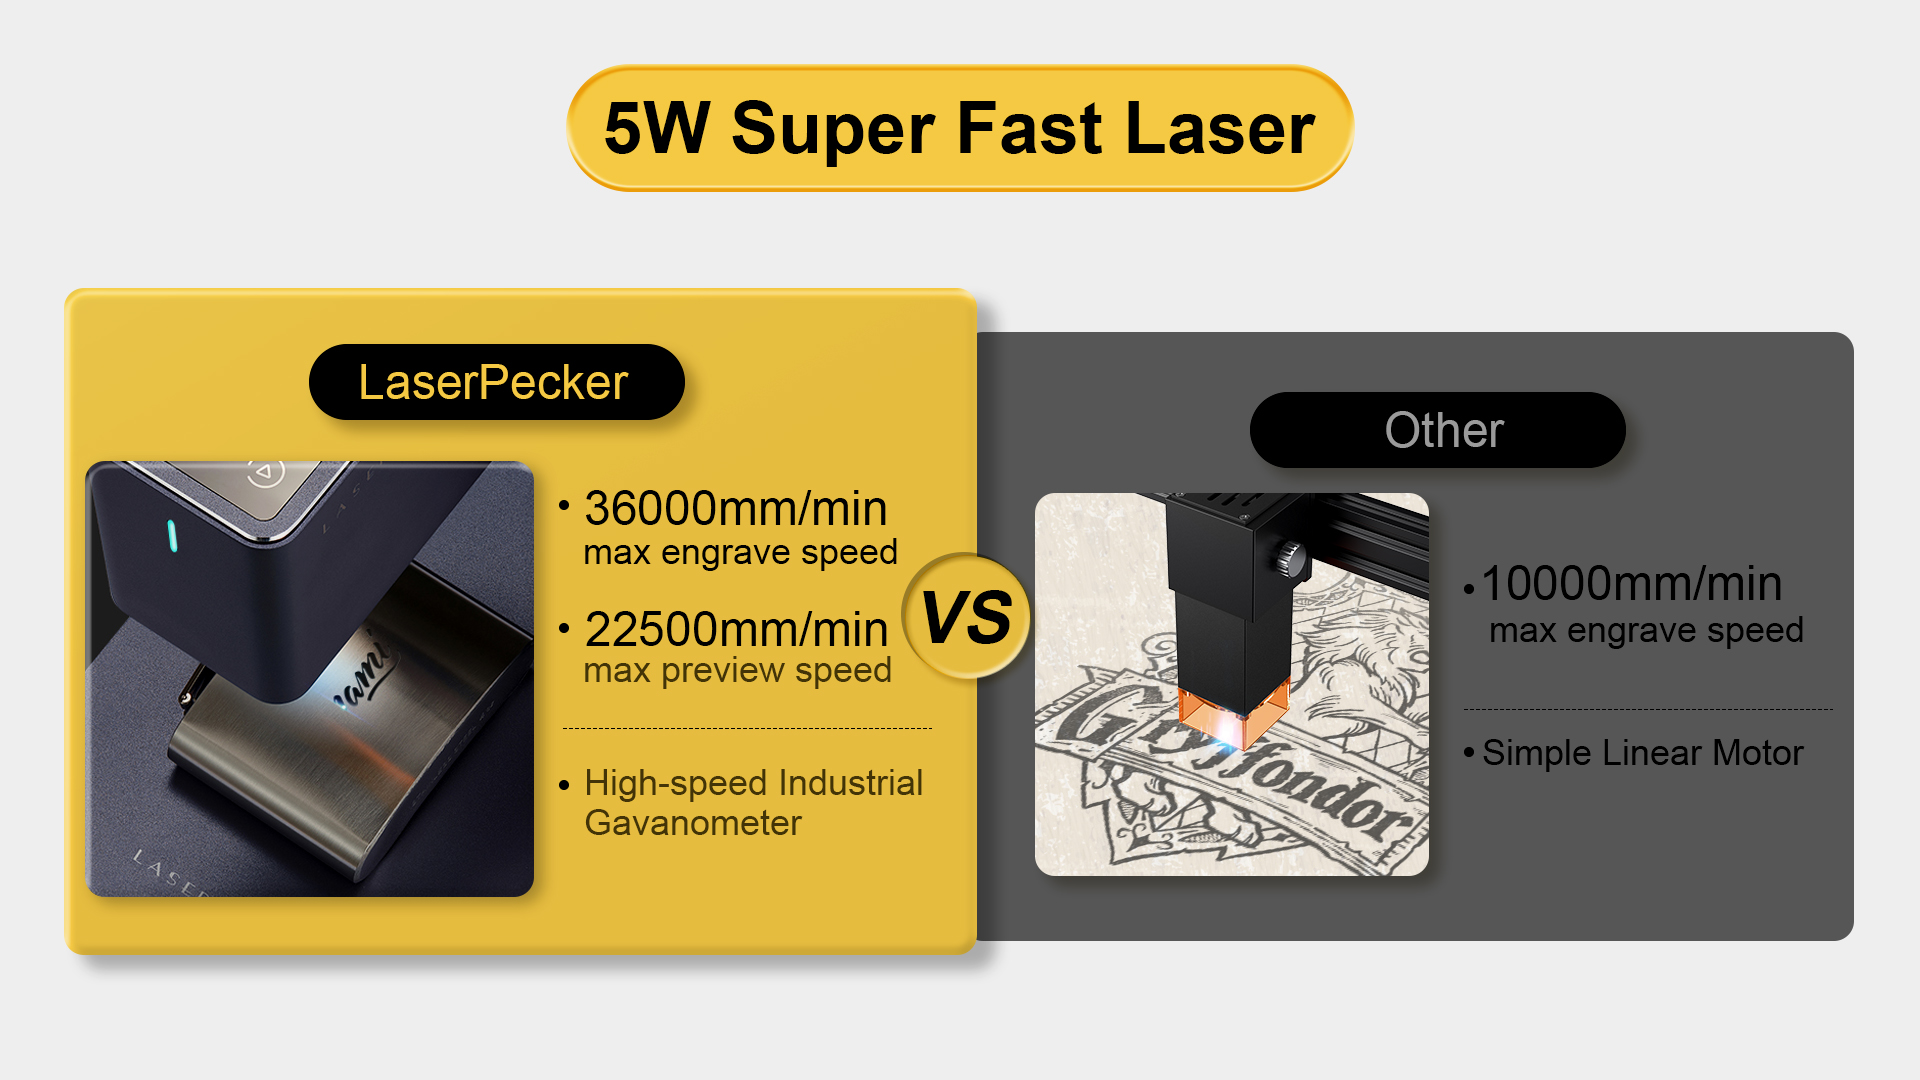 LaserPecker 2 Portable Smart Laser Engraver